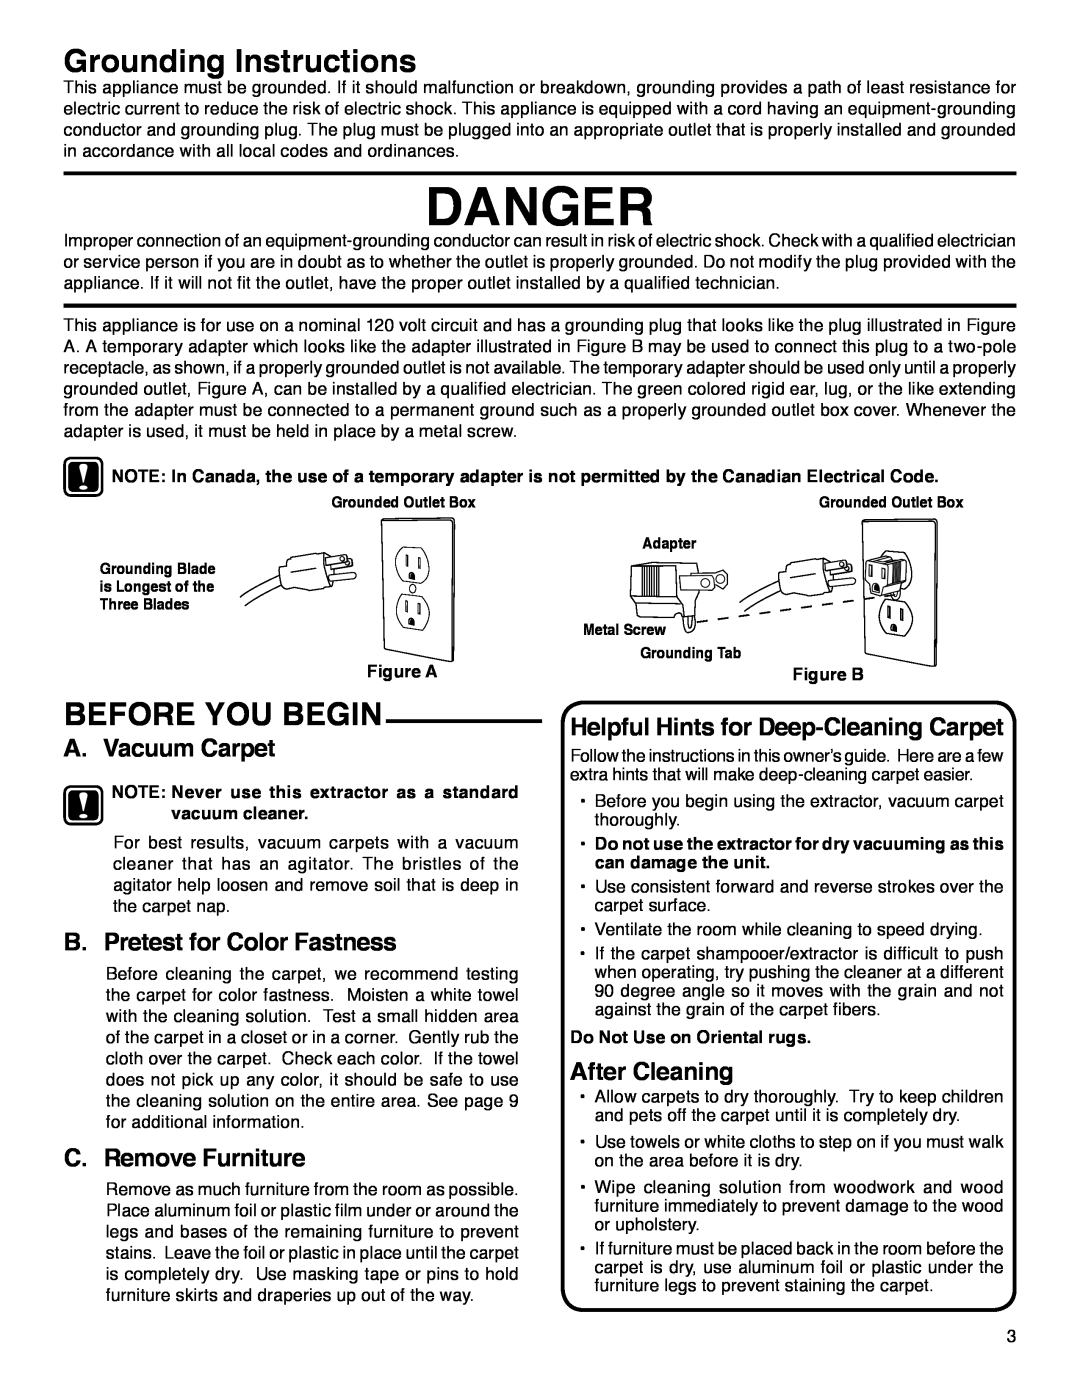 Eureka 2590 Series manual Grounding Instructions, Before You Begin, A. Vacuum Carpet, B. Pretest for Color Fastness, Danger 